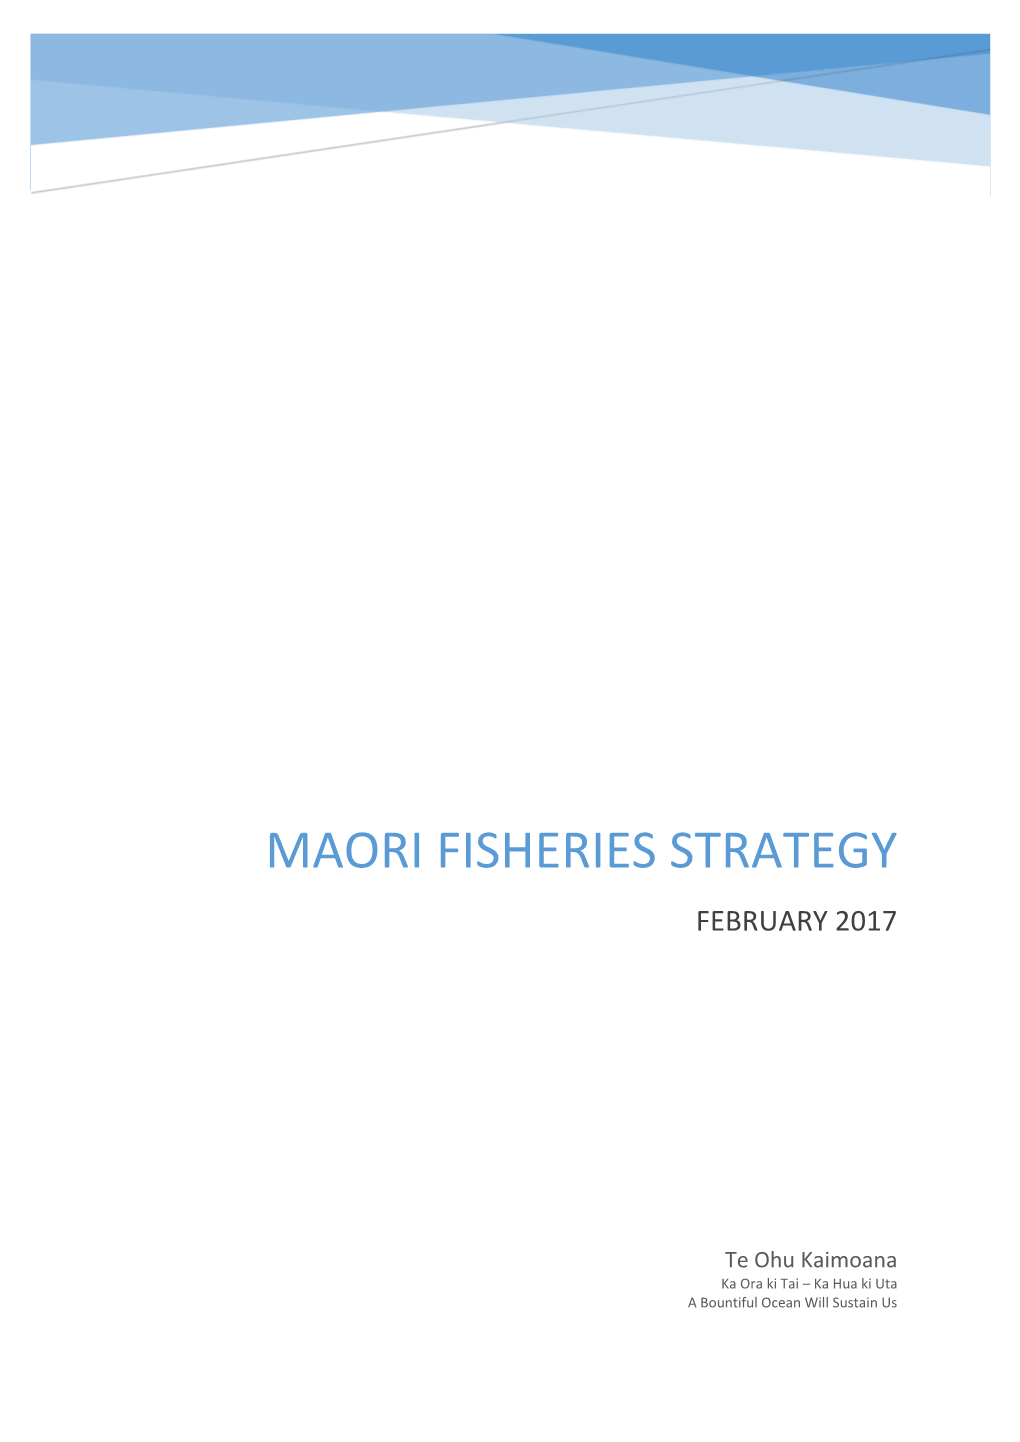 Maori Fisheries Strategy February 2017